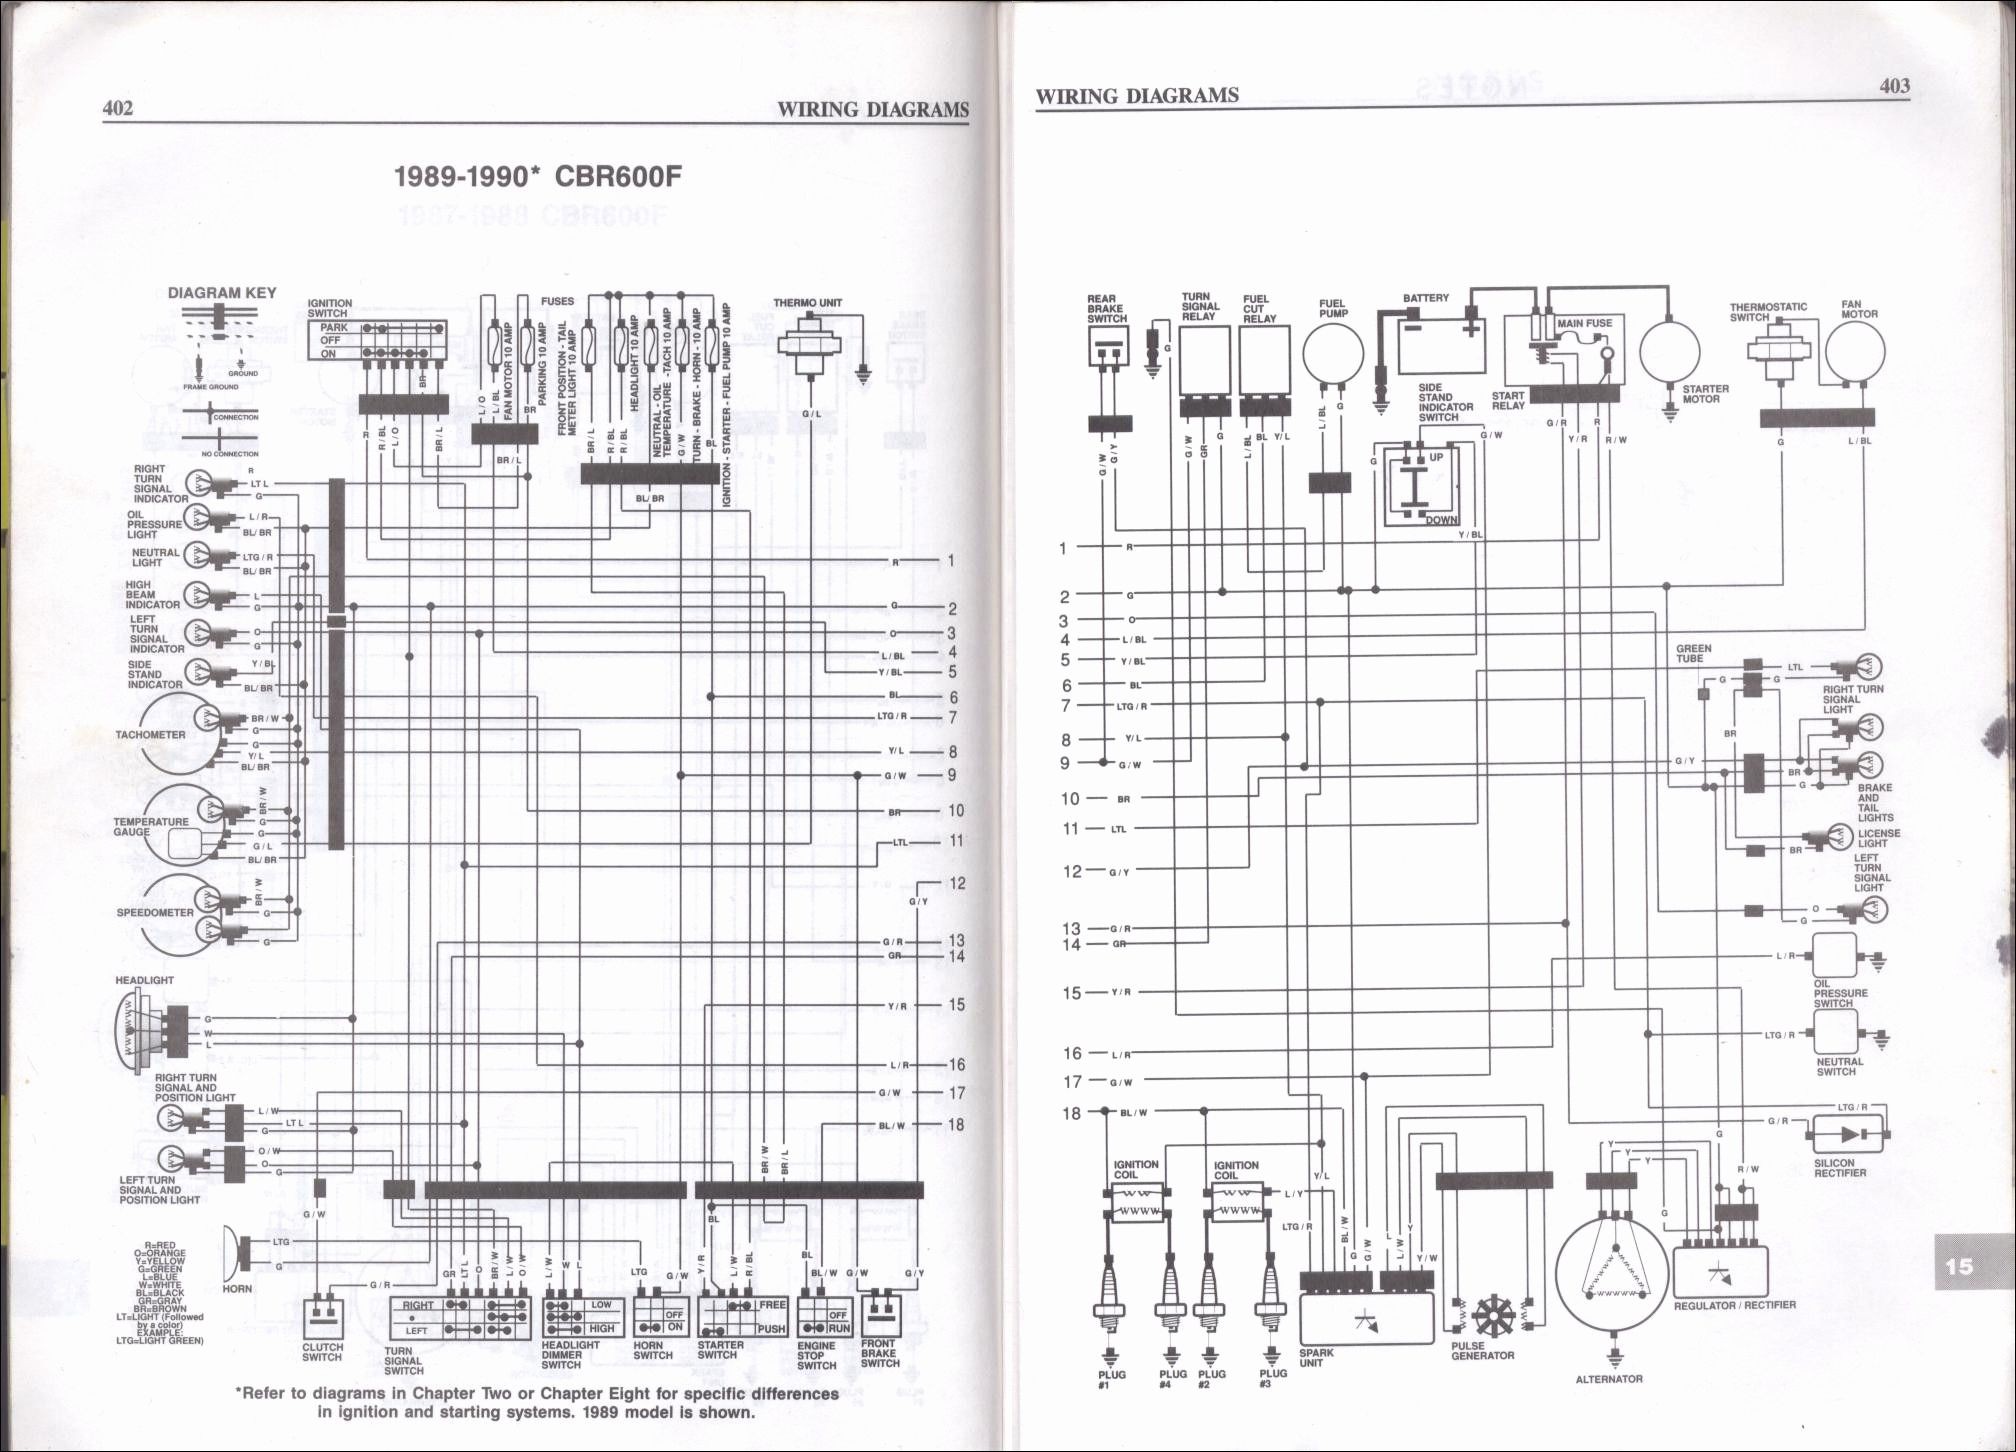 Wiring Diagram for Gas 99 Club Car Voltage Regulator Honda C70 Wiring Diagram Auto Electrical Wiring Diagram Of Wiring Diagram for Gas 99 Club Car Voltage Regulator